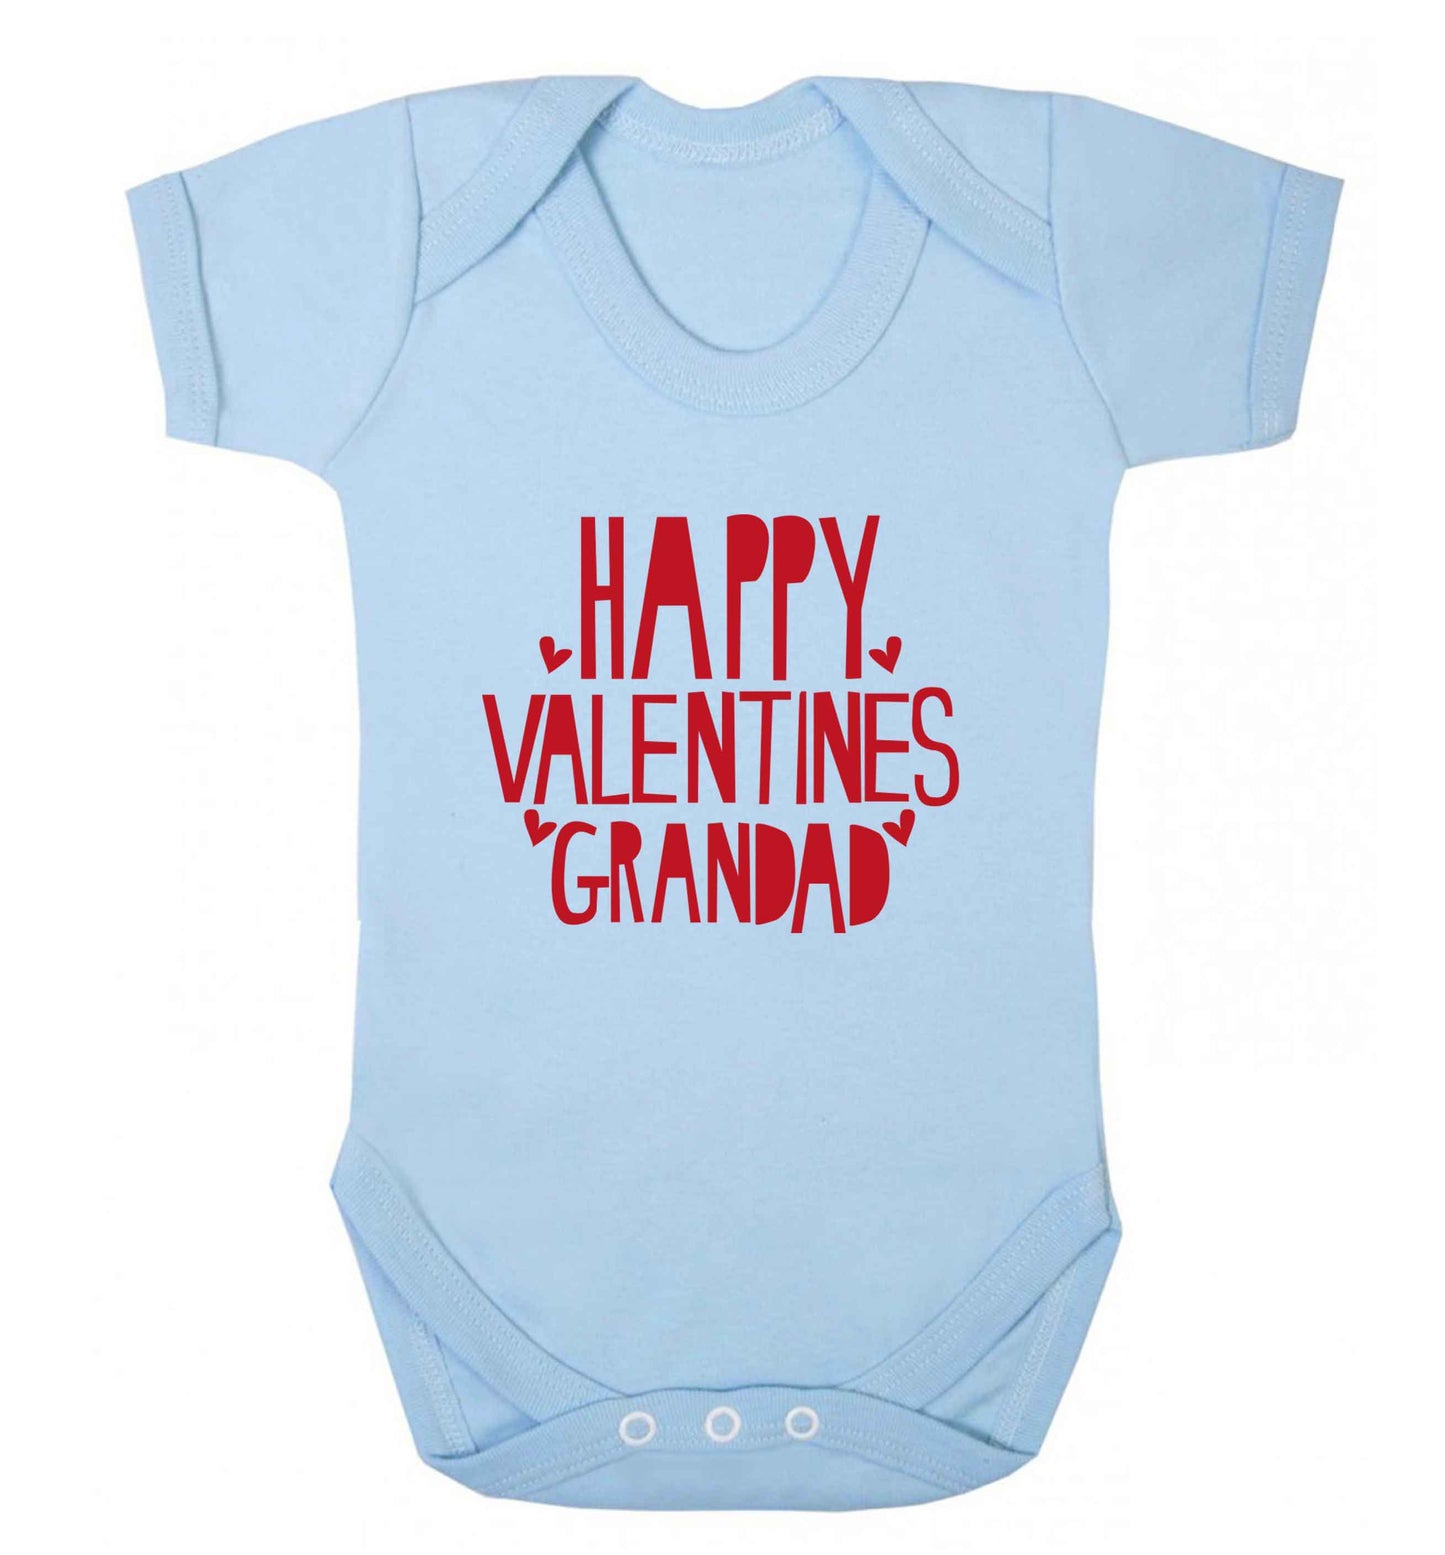 Happy valentines grandad baby vest pale blue 18-24 months